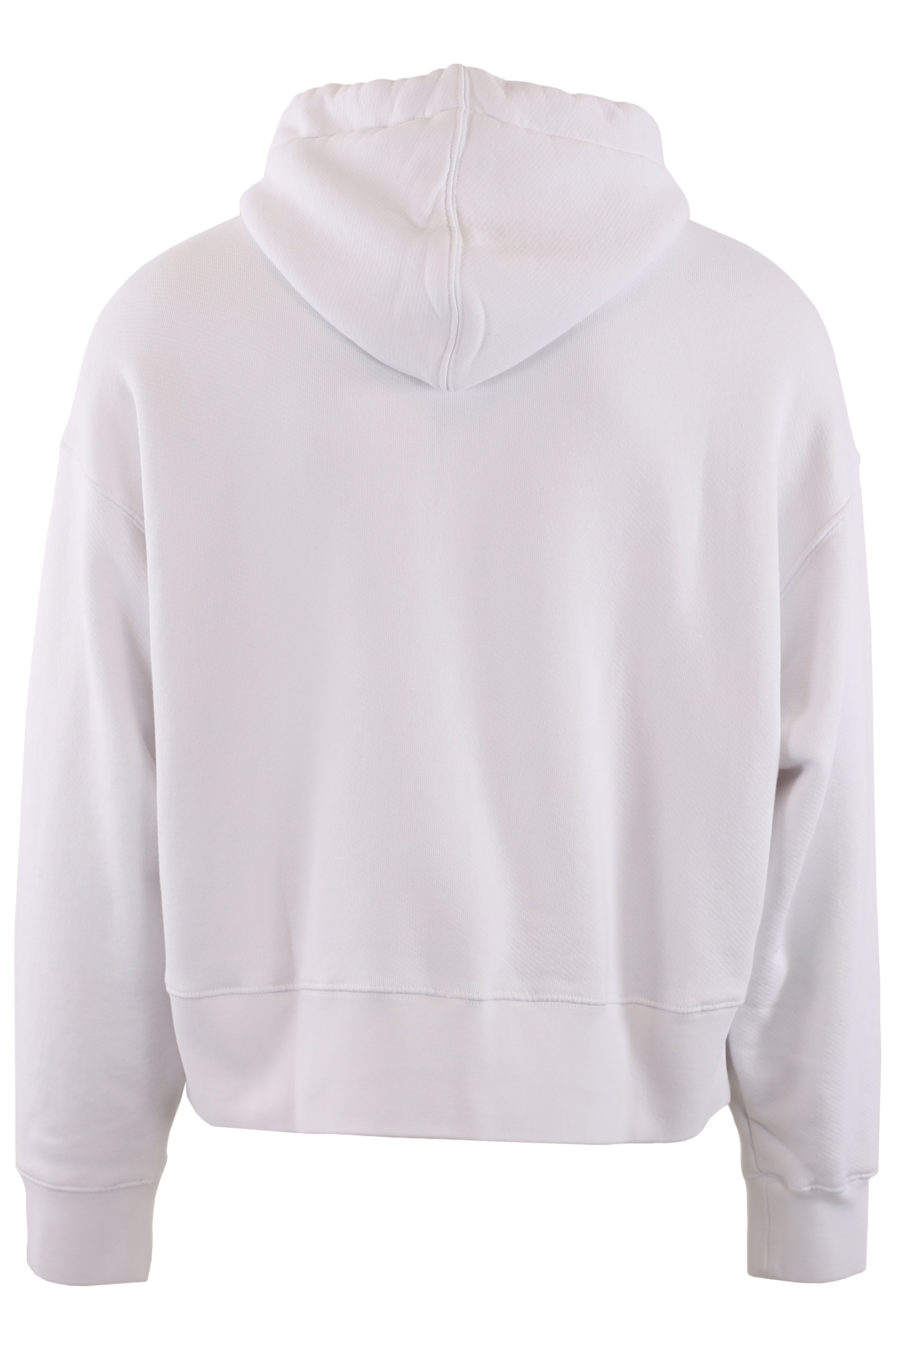 White hooded sweatshirt with print - IMG1 9222